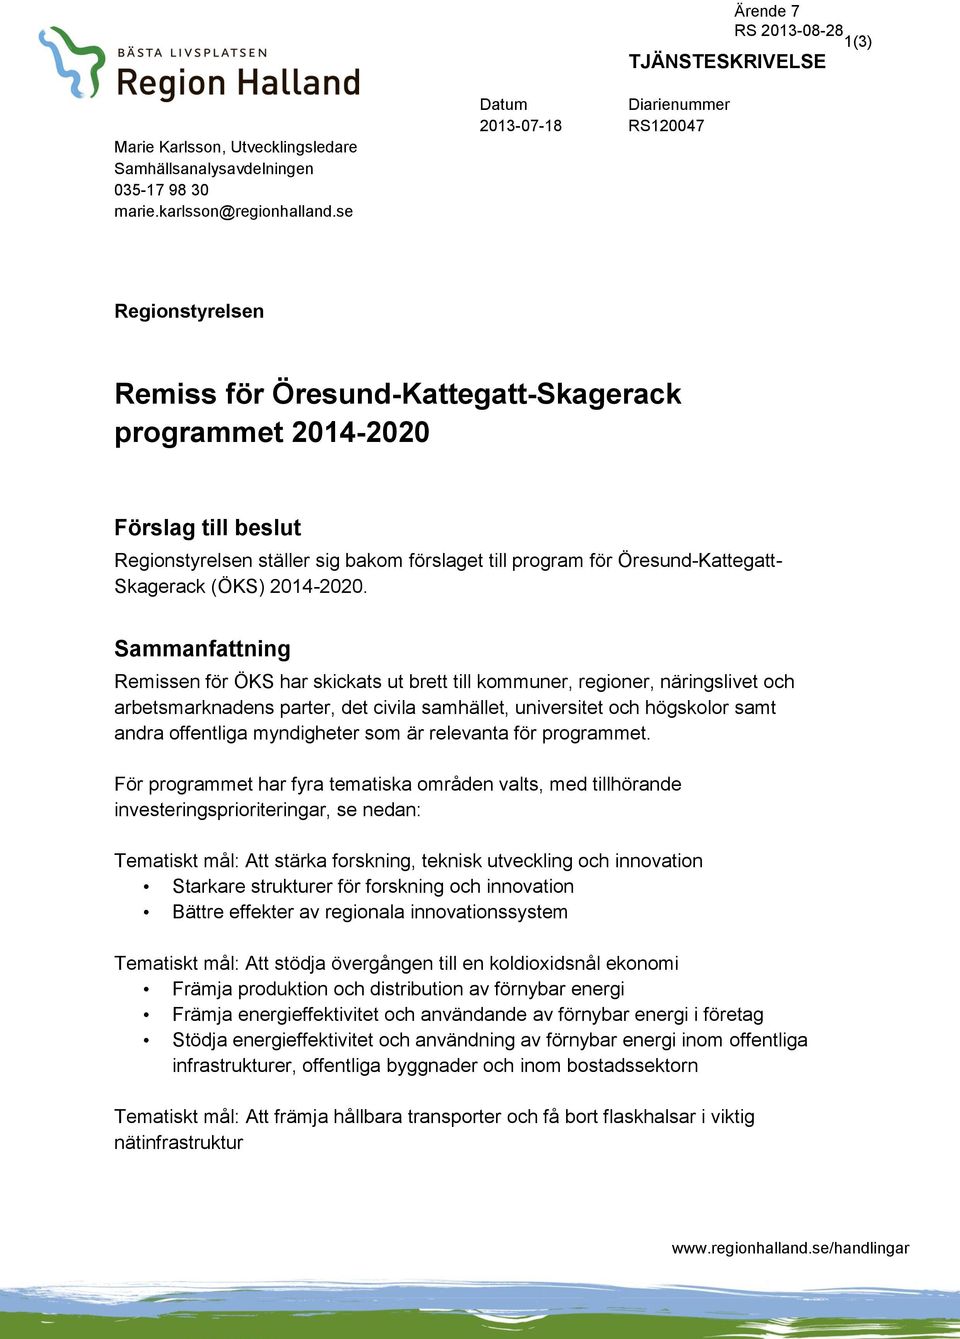 Öresund-Kattegatt- Skagerack (ÖKS) 2014-2020.